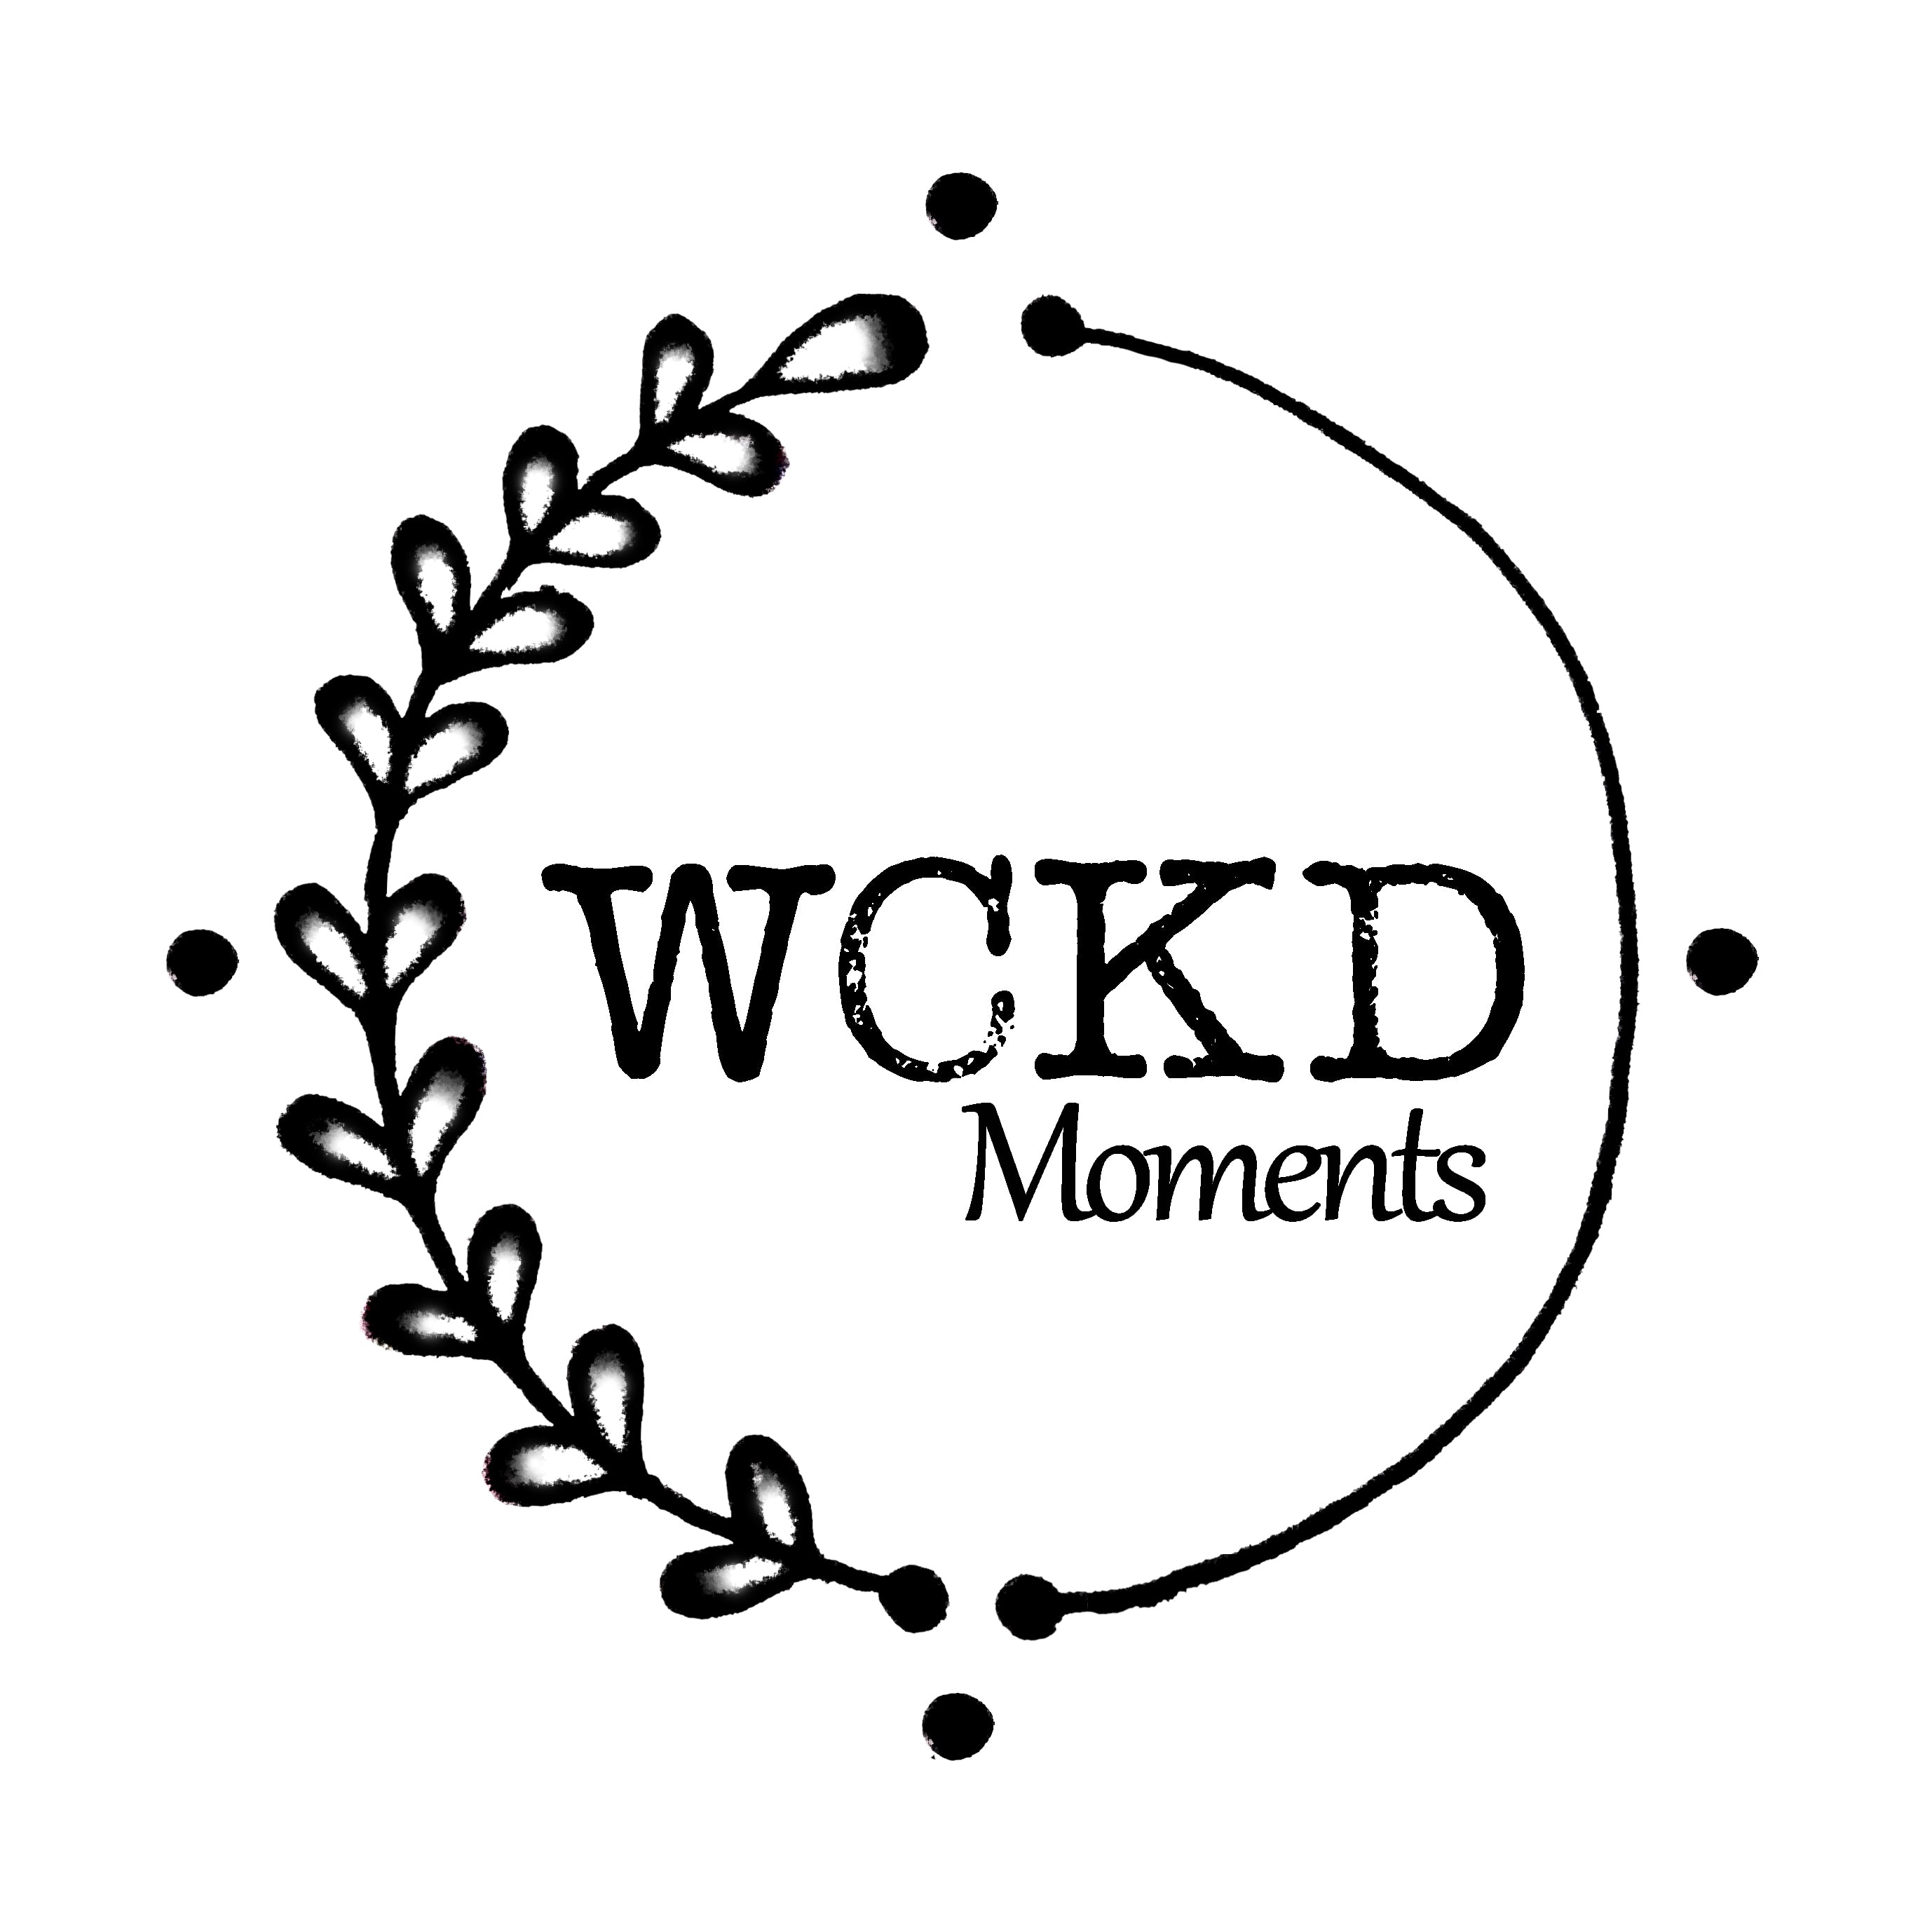 WCKD MOMENTS